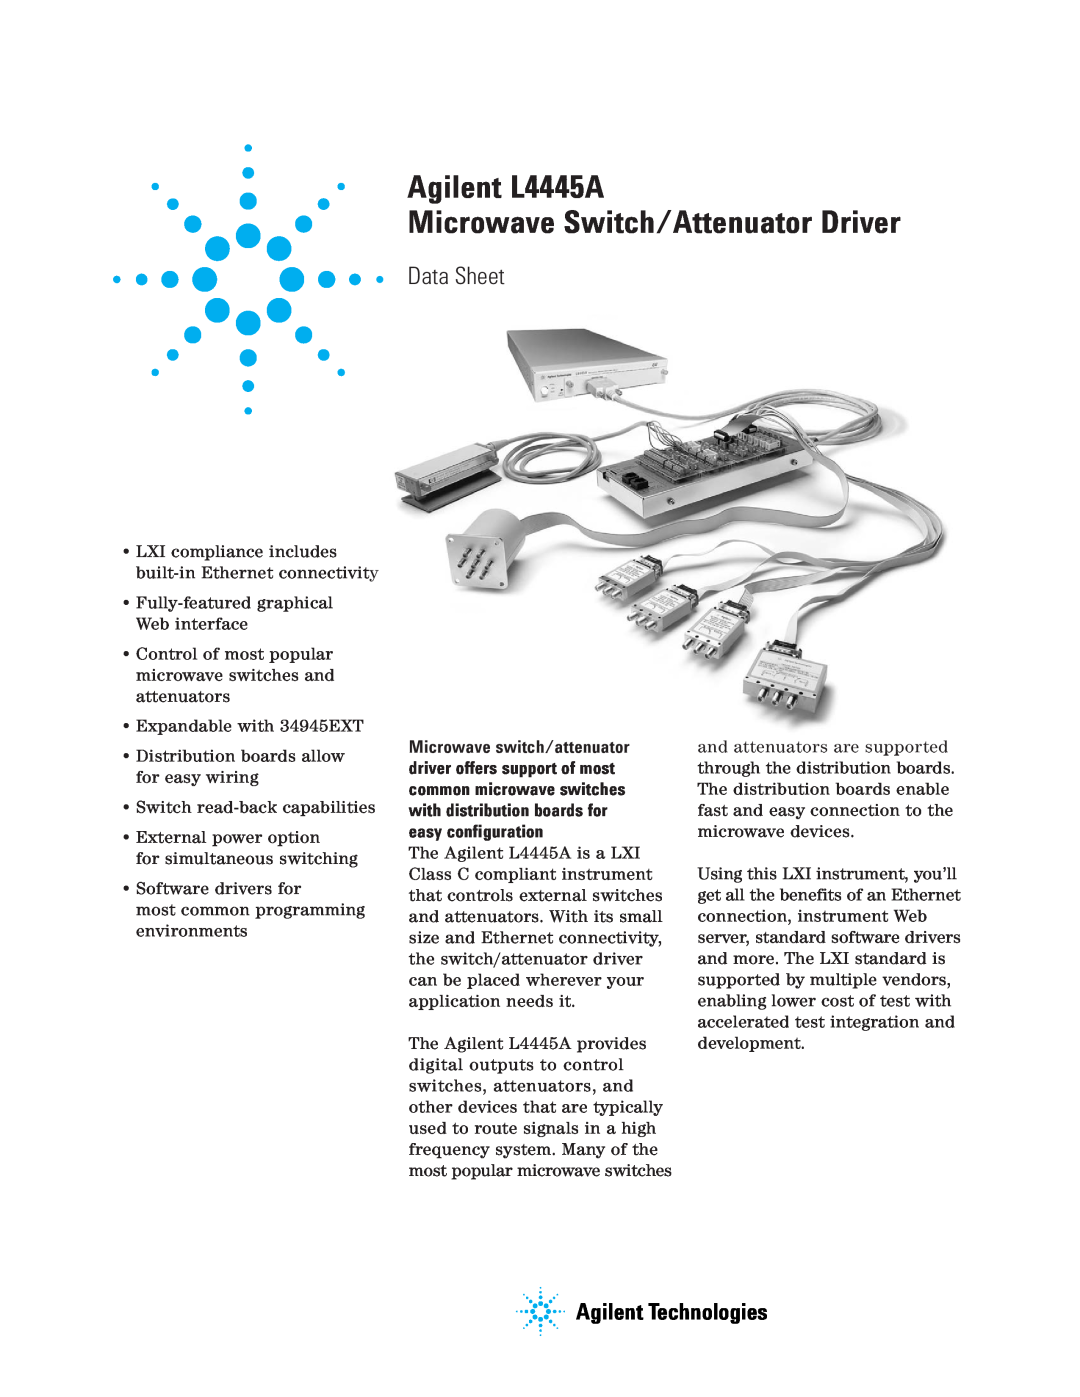 Agilent Technologies manual Agilent Technologies, Agilent L4445A Microwave Switch/Attenuator Driver, Data Sheet 